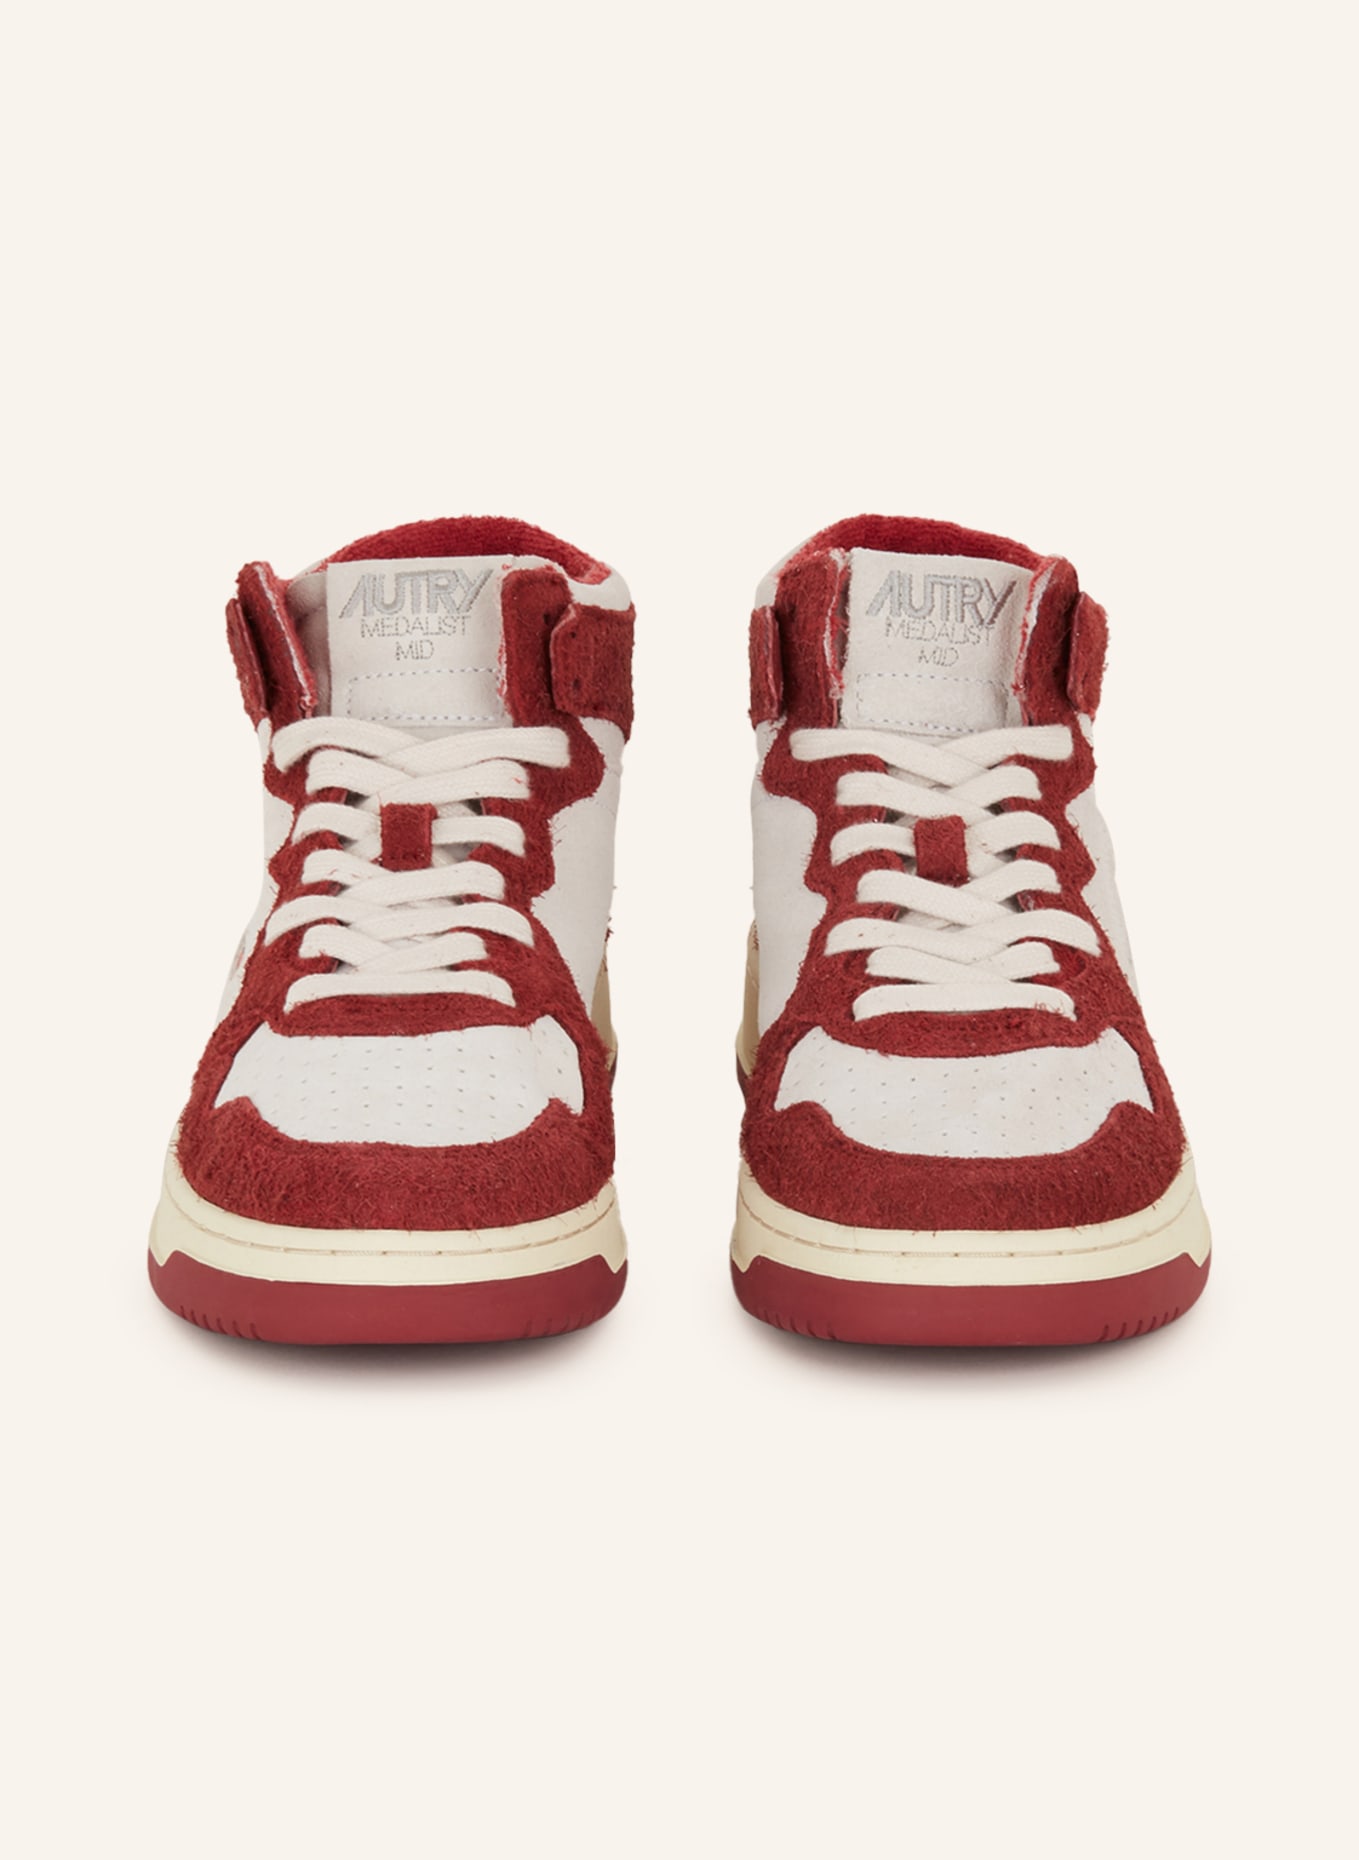 AUTRY Hightop-Sneaker MEDALIST, Farbe: CREME/ DUNKELROT (Bild 3)